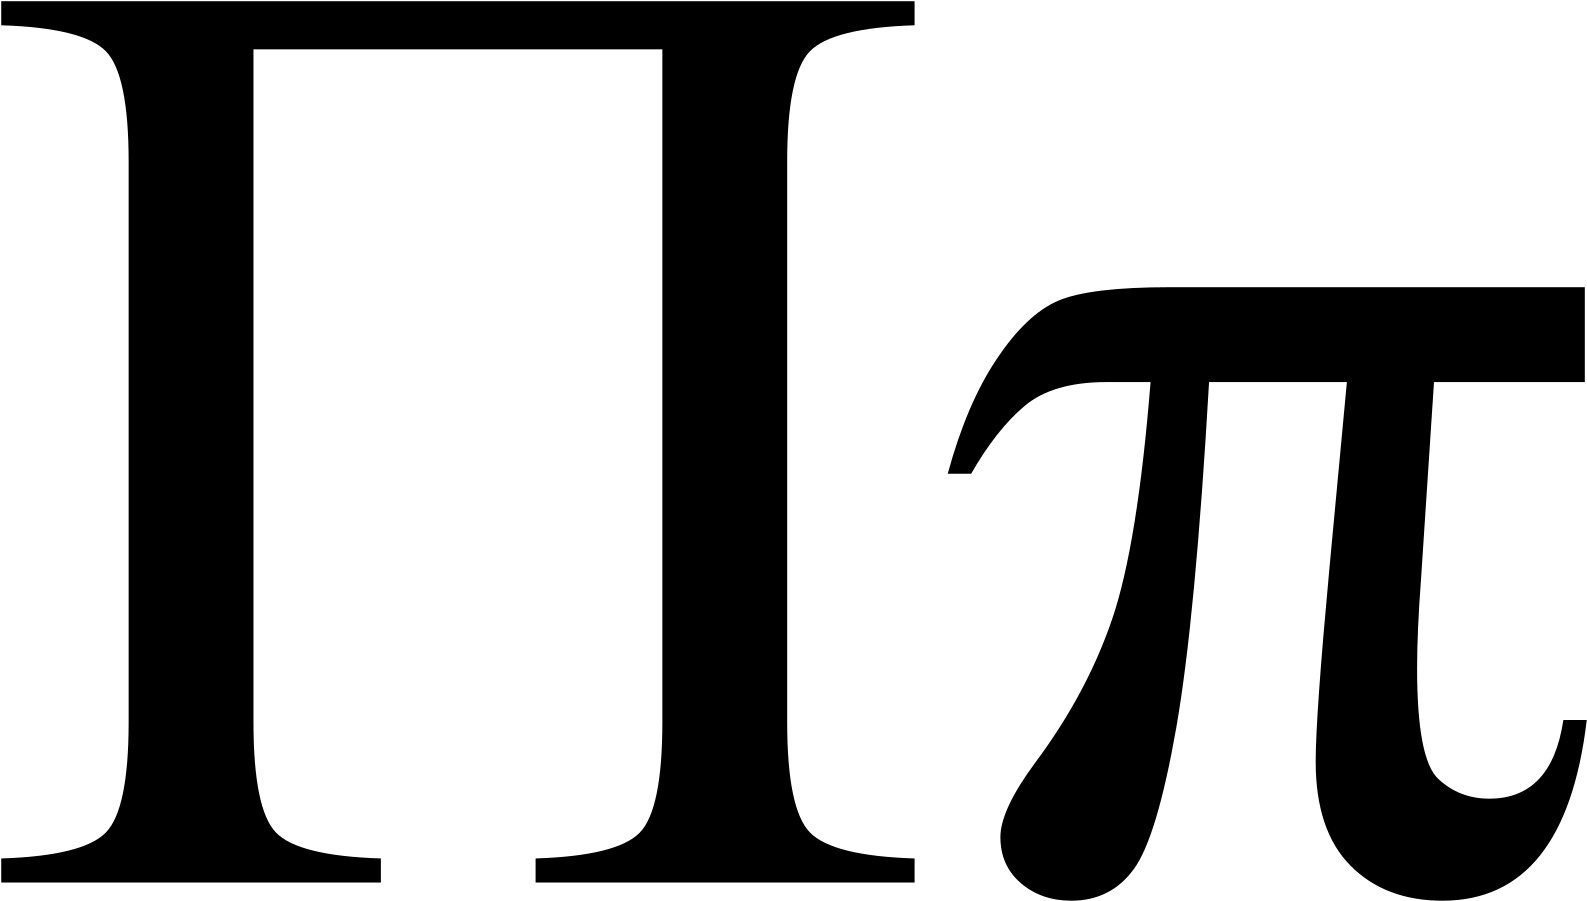 Open - Pi And Square Root Symbols (2000x1333)